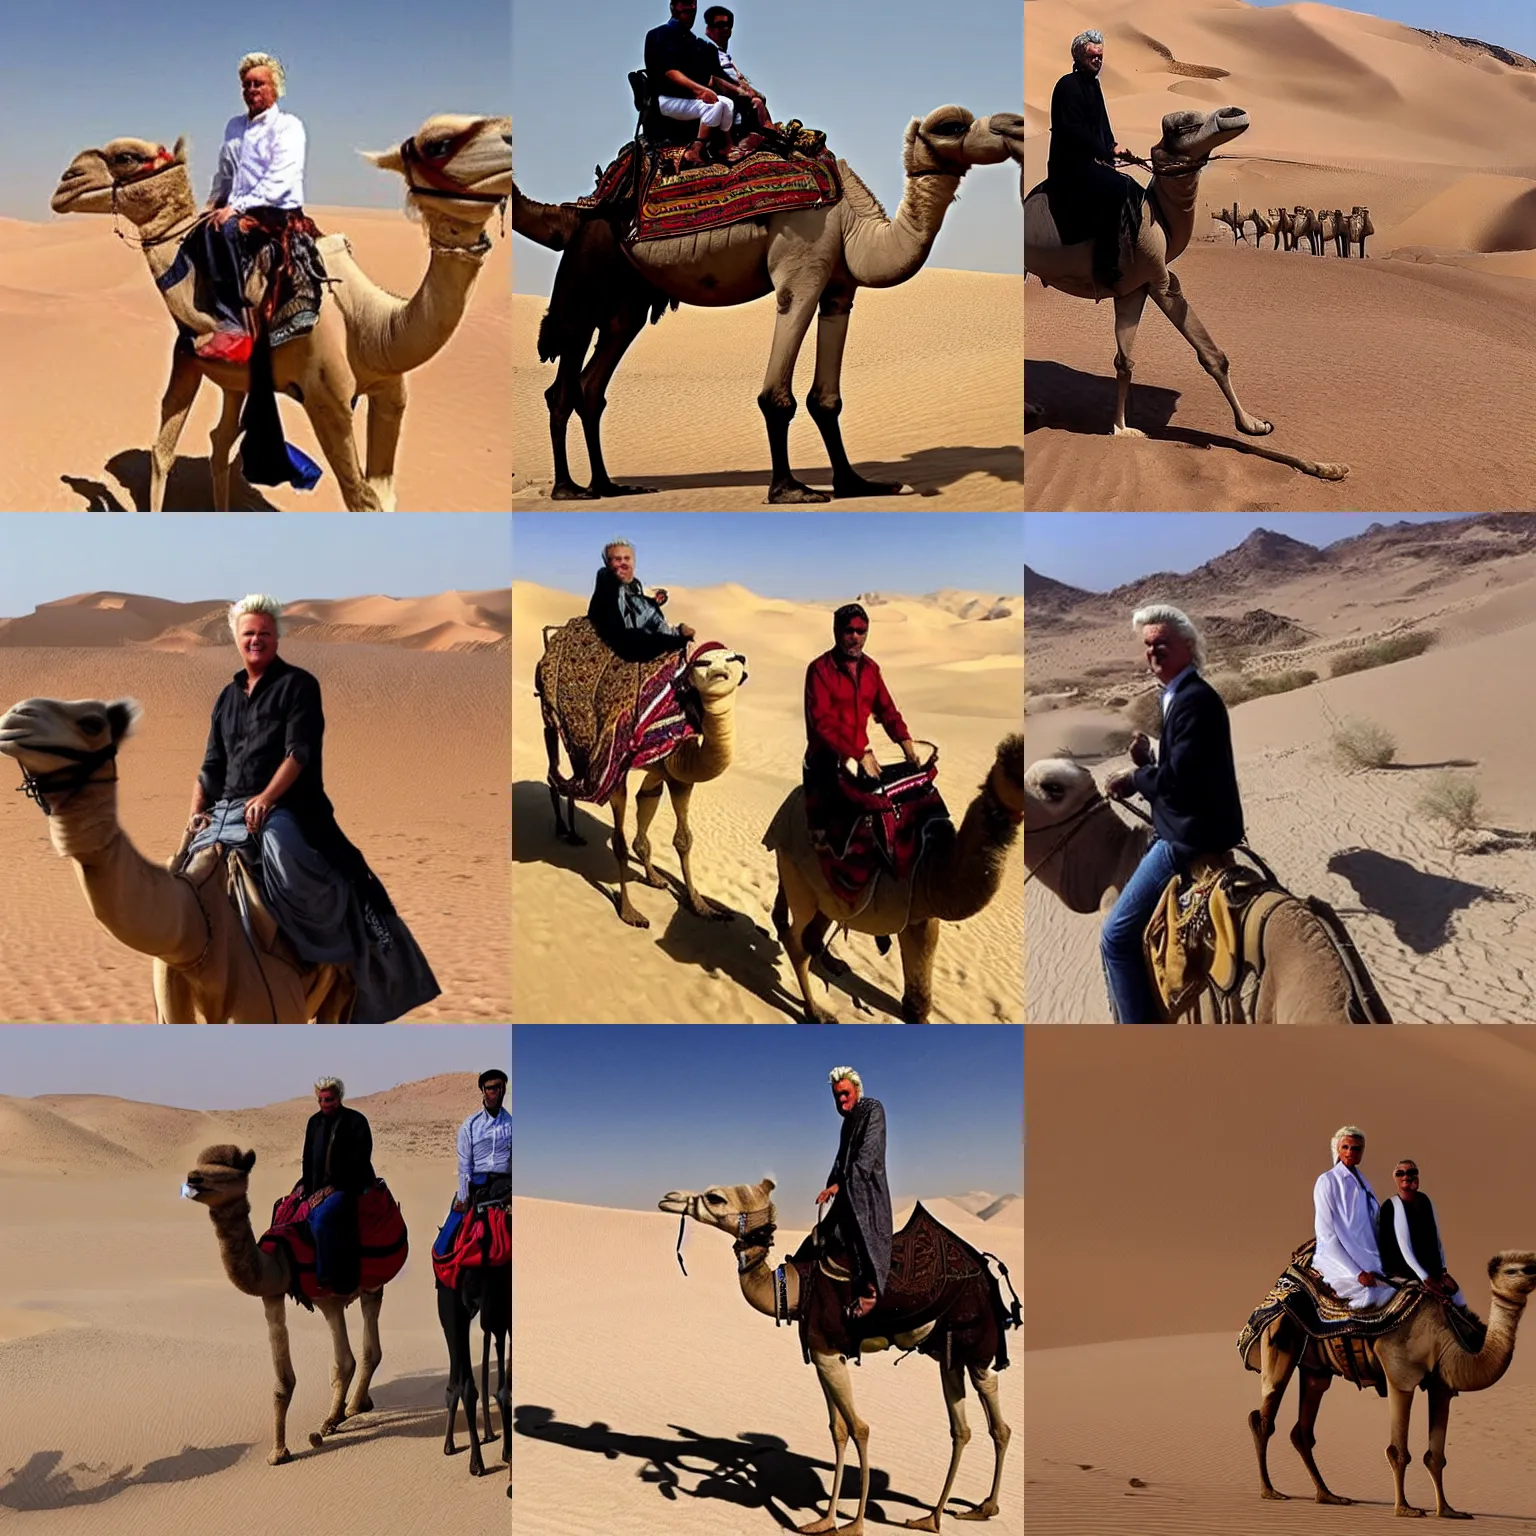 Prompt: geert wilders riding a camel in the desert